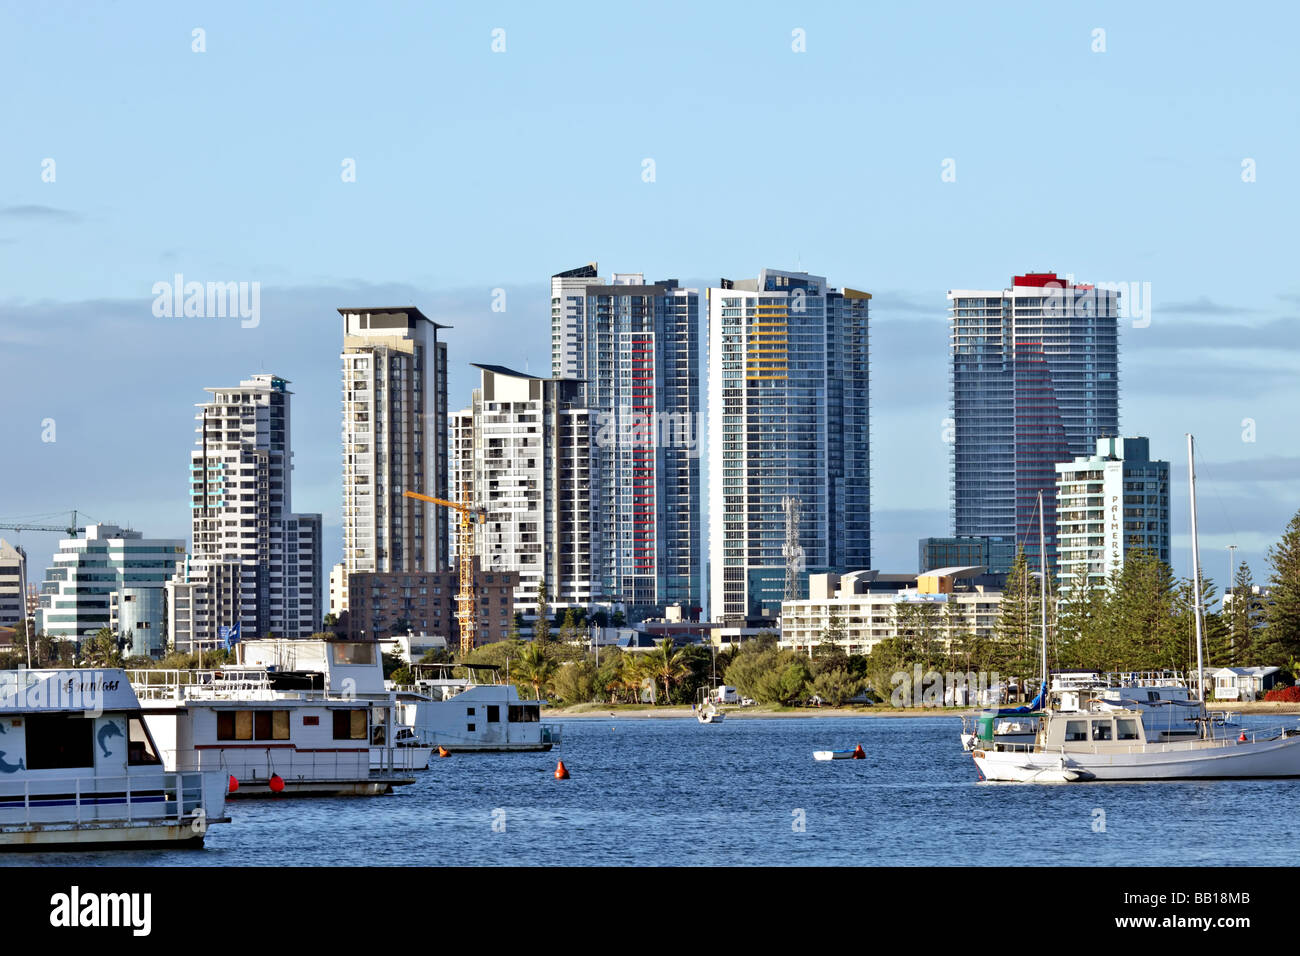 City on a bay with boats and marinas Stock Photo